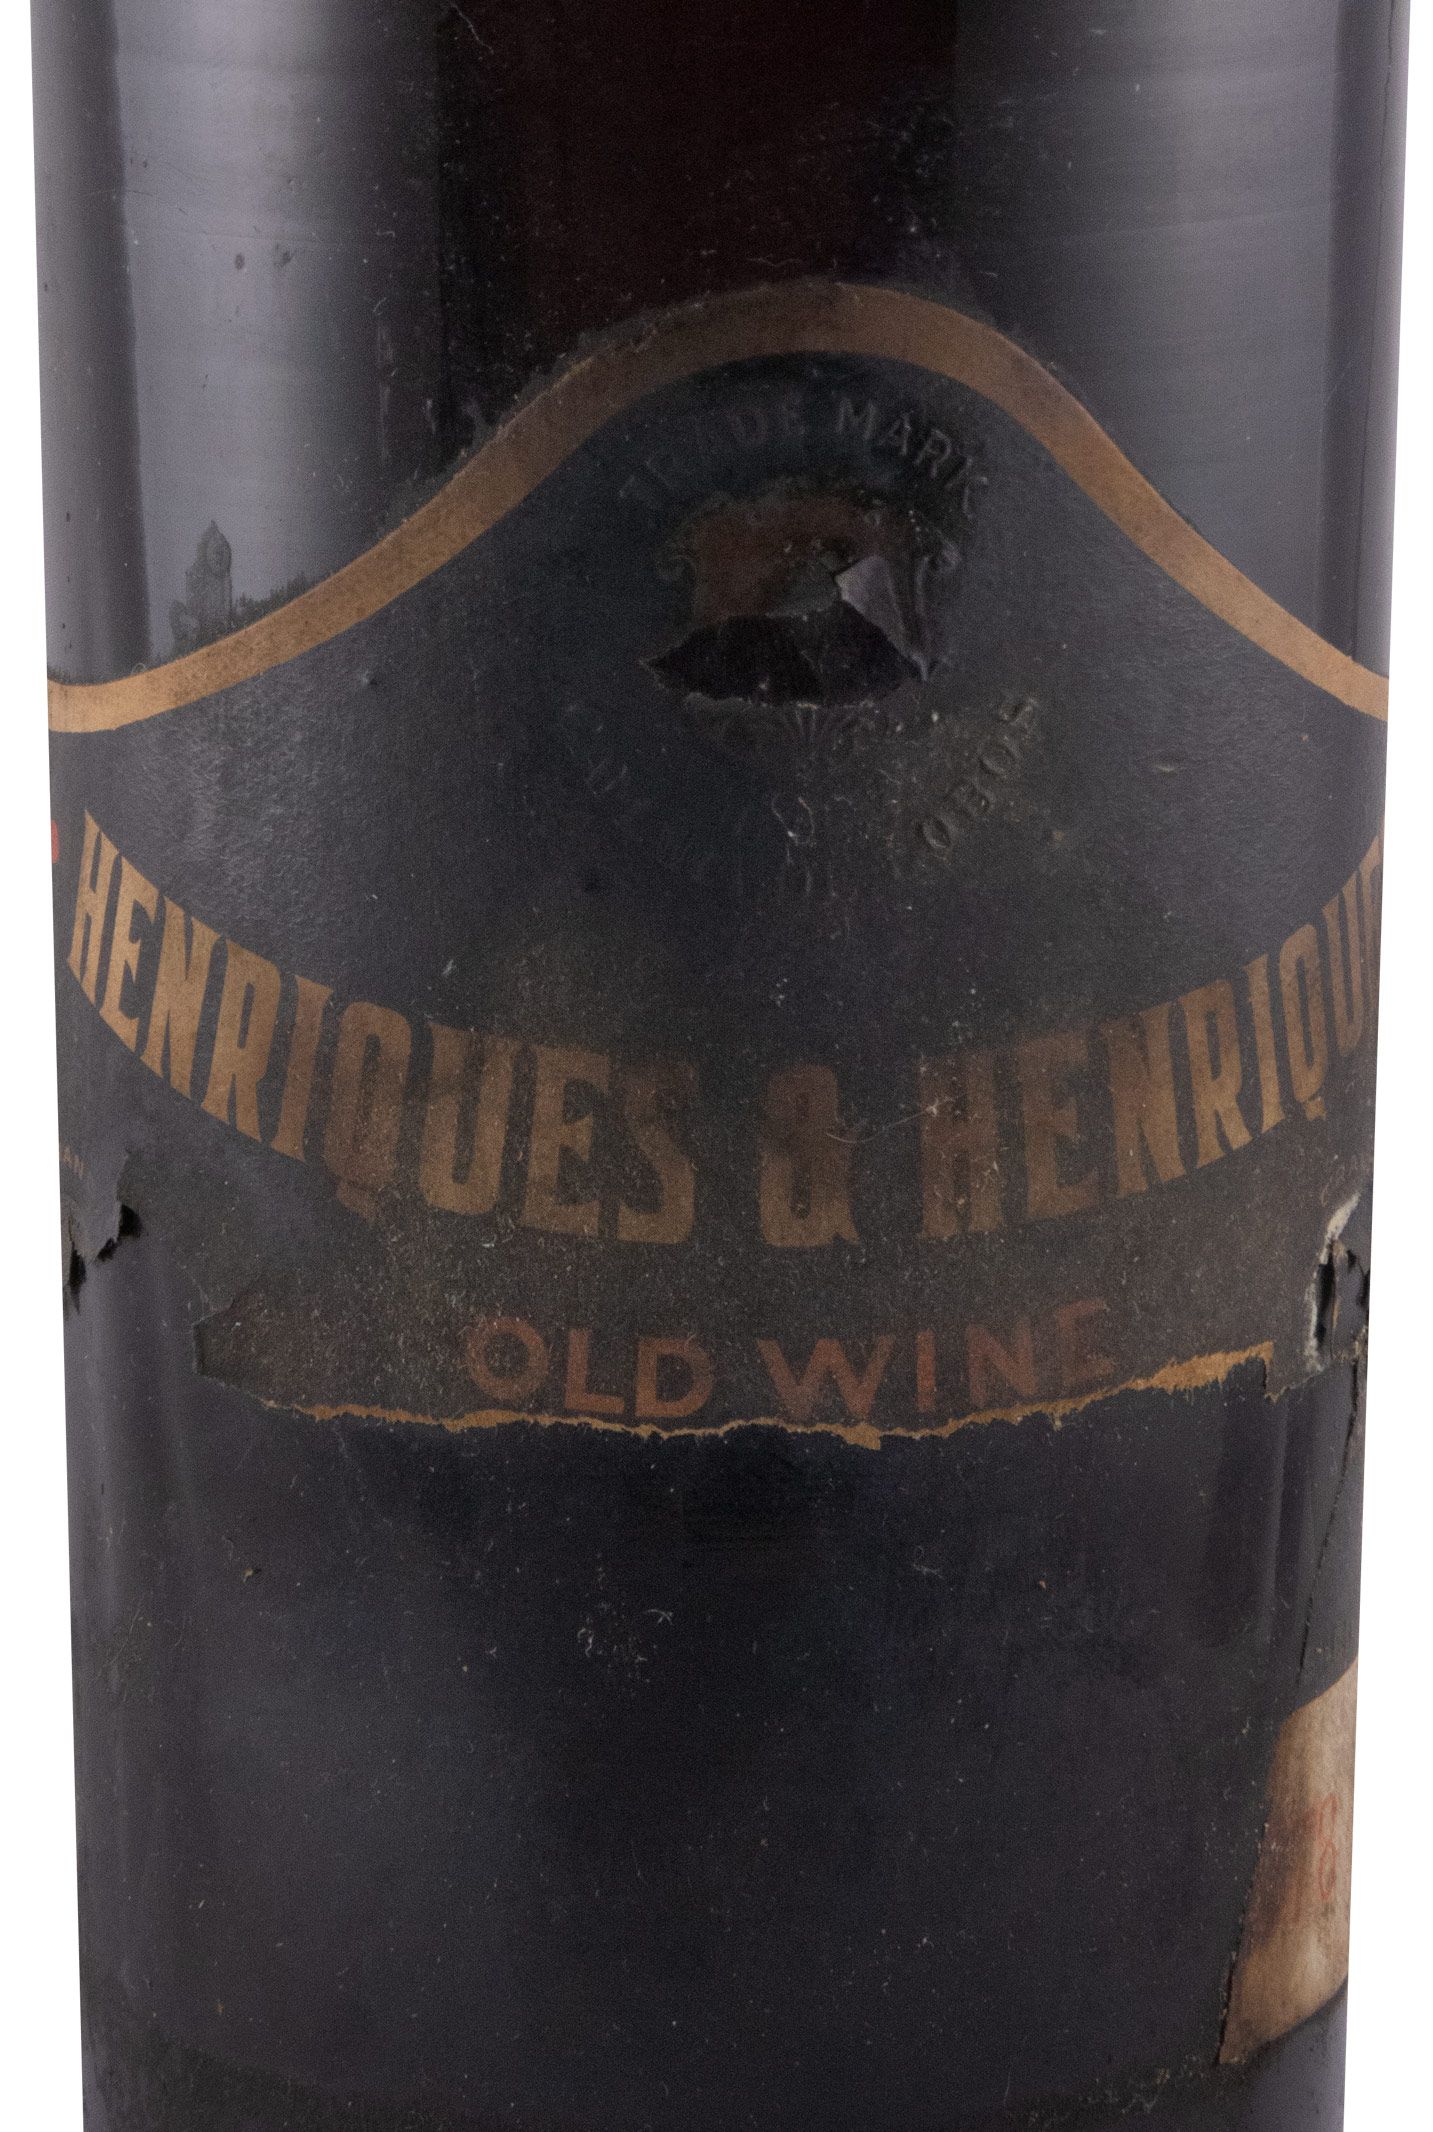 1878 Madeira Henriques & Henriques Boal Velhíssimo (damaged label)